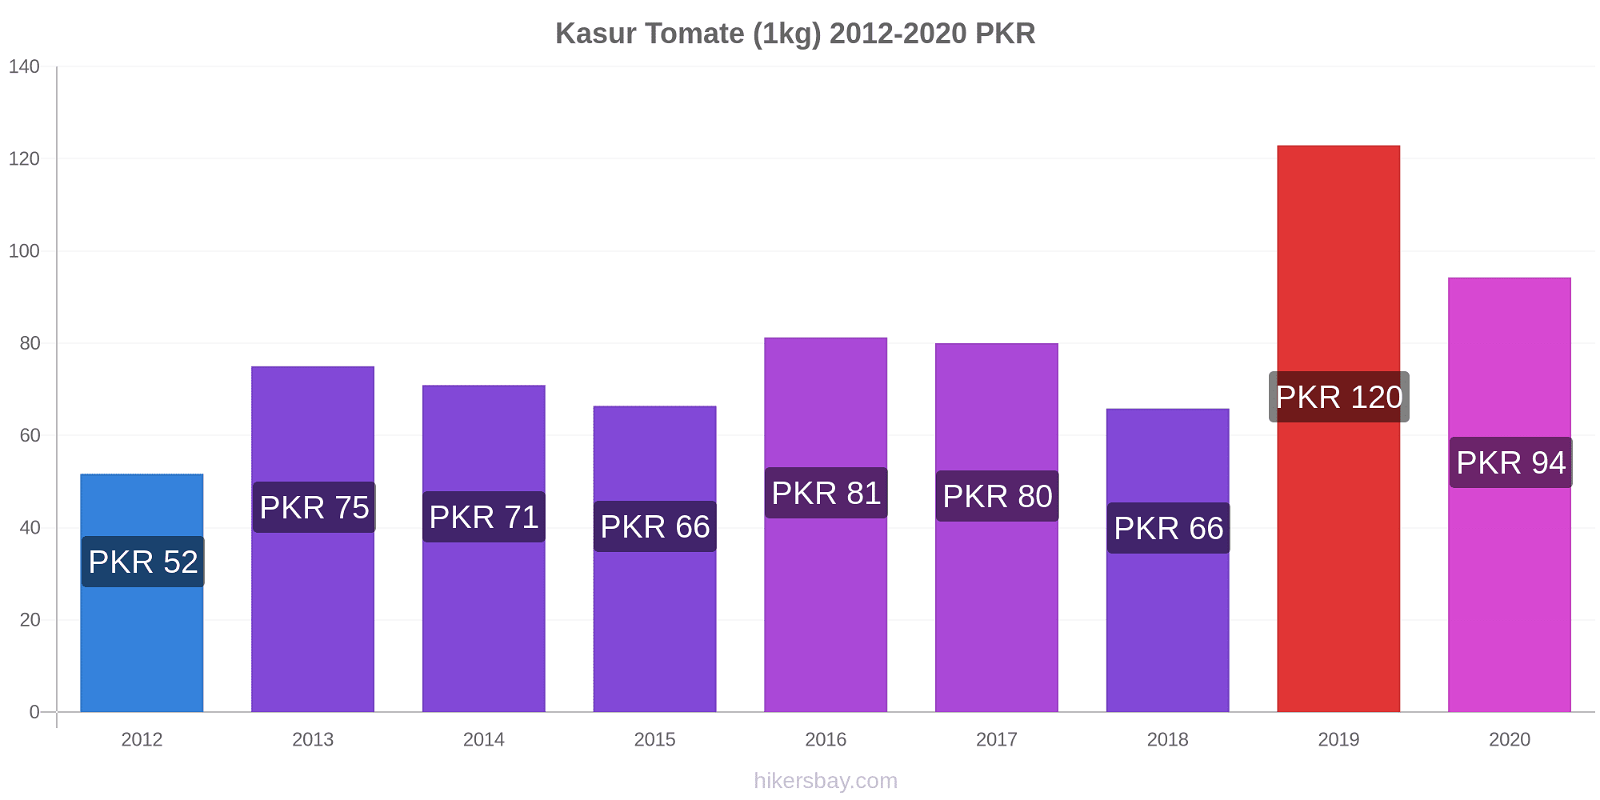 Kasur changements de prix Tomate (1kg) hikersbay.com